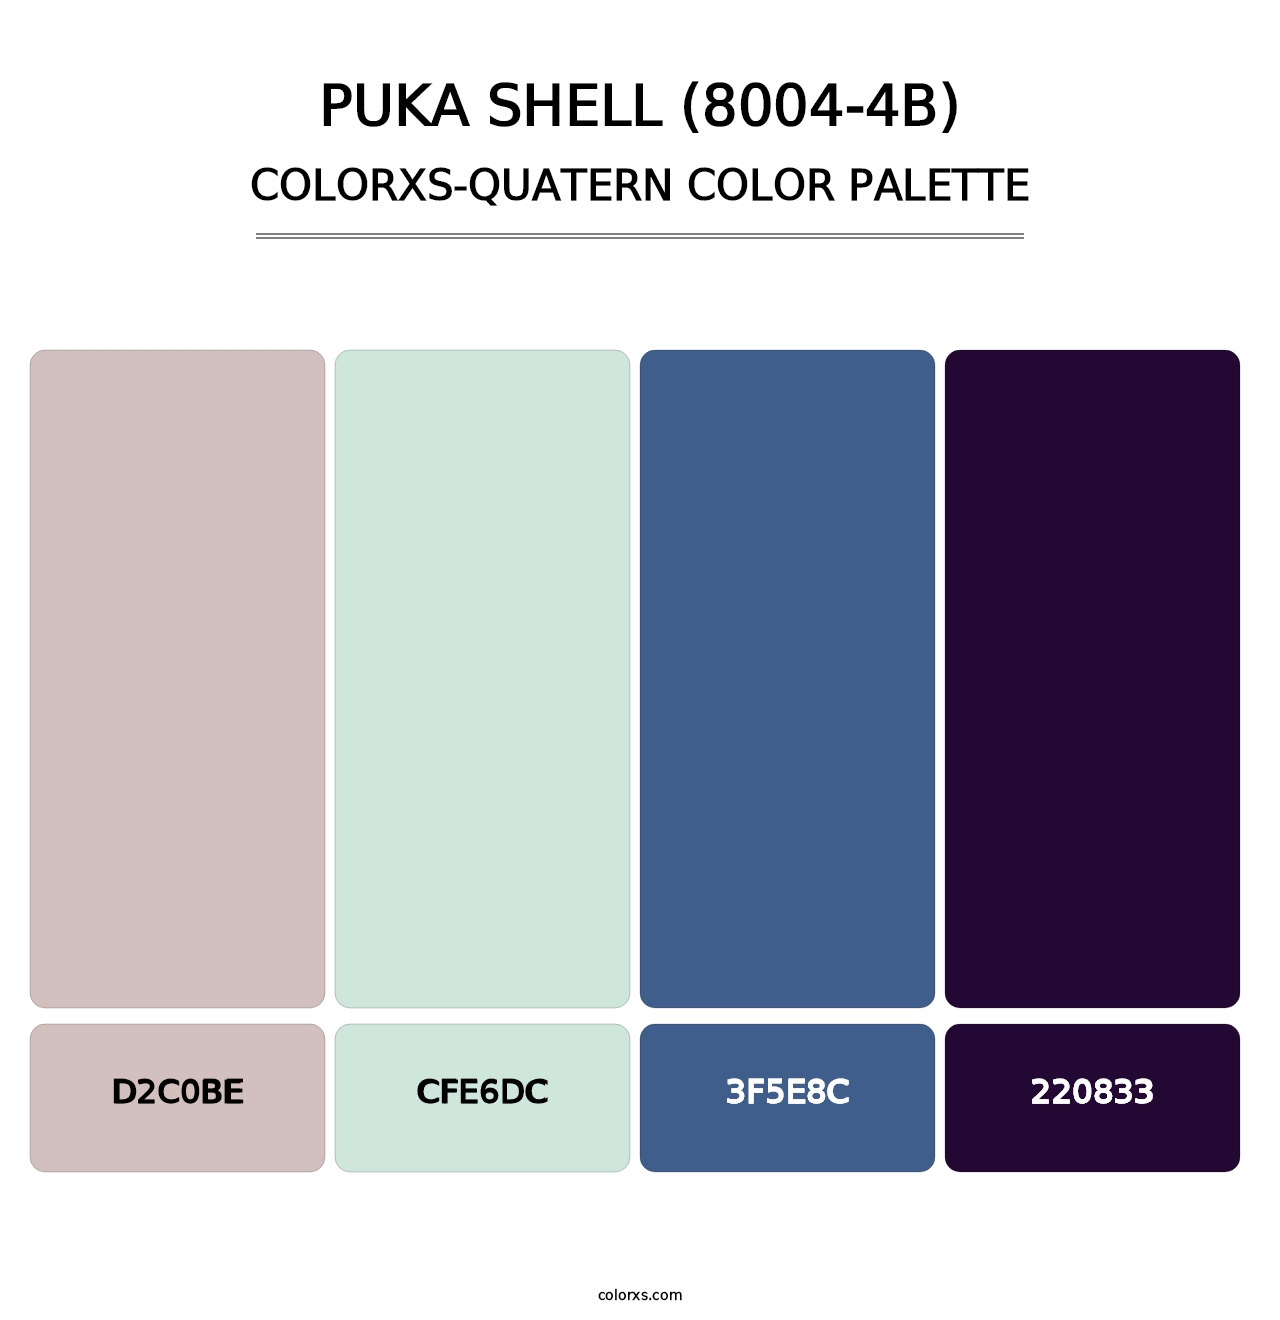 Puka Shell (8004-4B) - Colorxs Quatern Palette